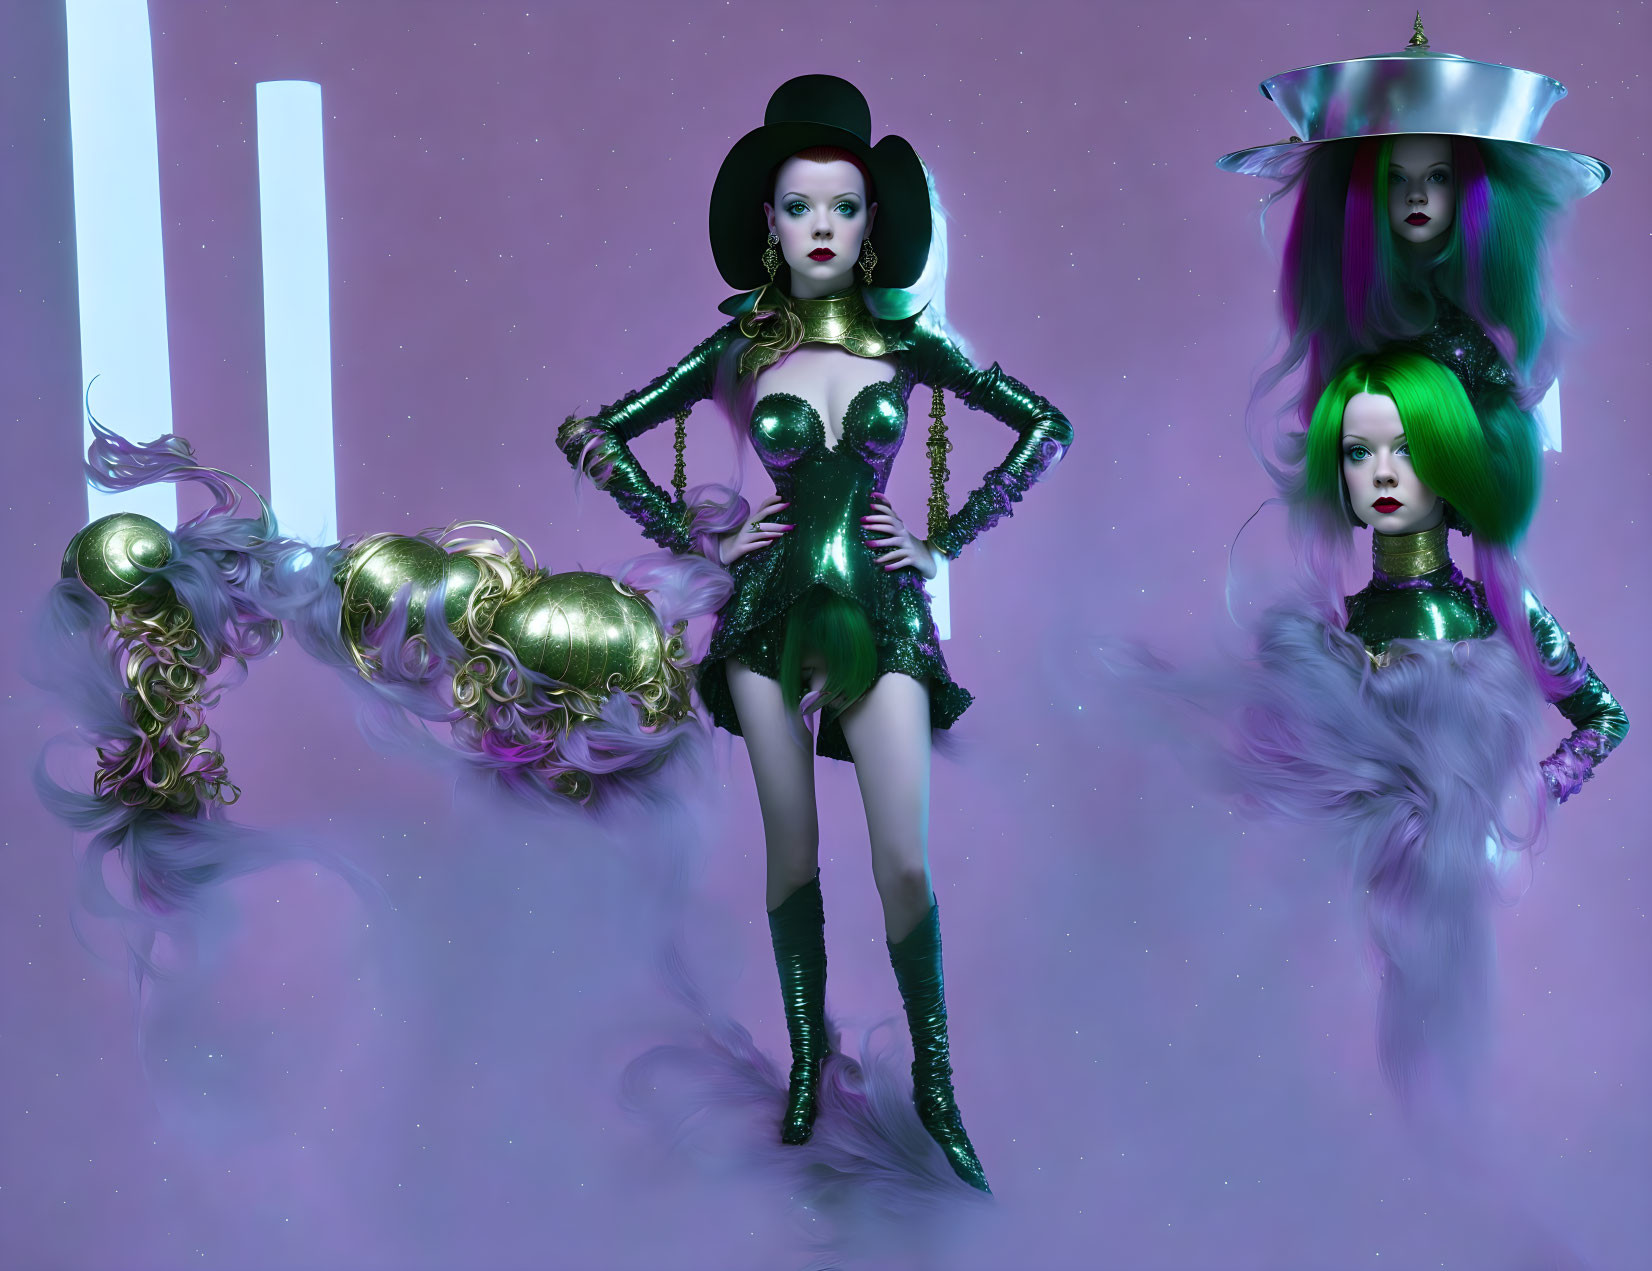 Three dolls in futuristic metallic attire on purple background with smoky effects.